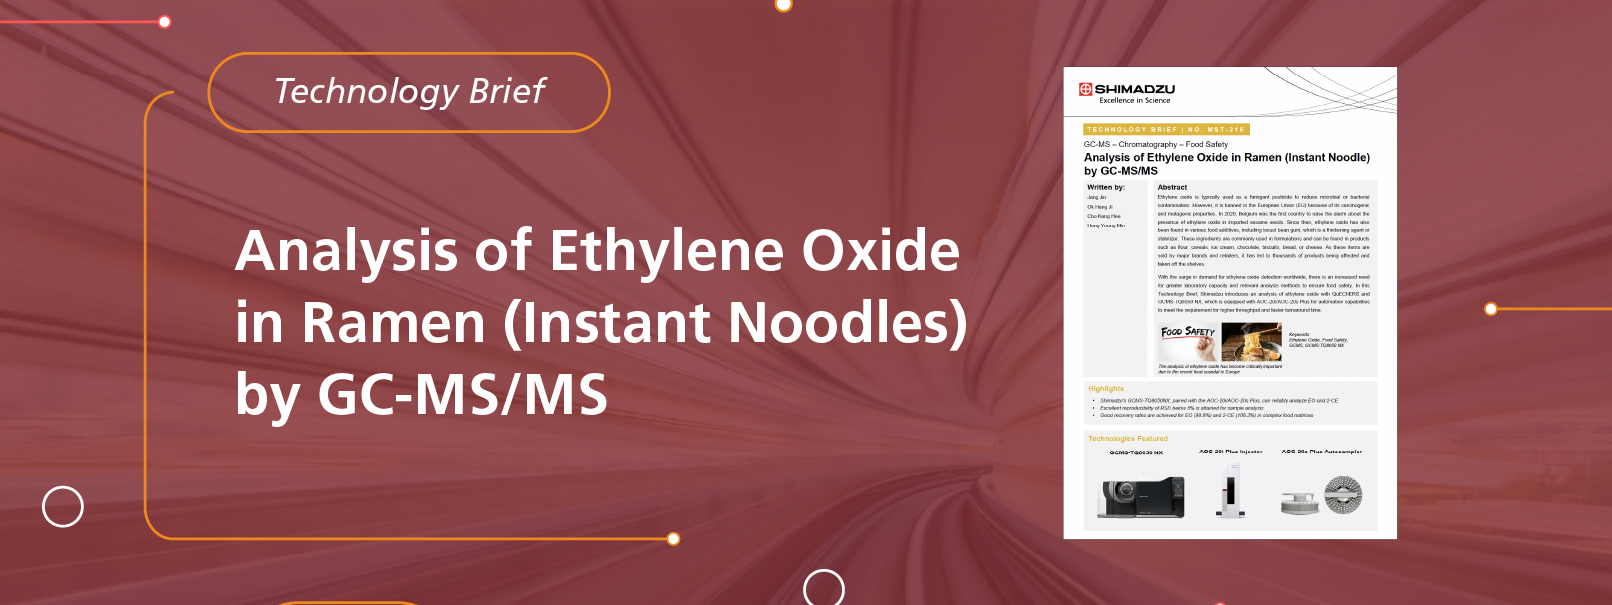 Analysis of Ethylene Oxide in Ramen by GCMS/MS